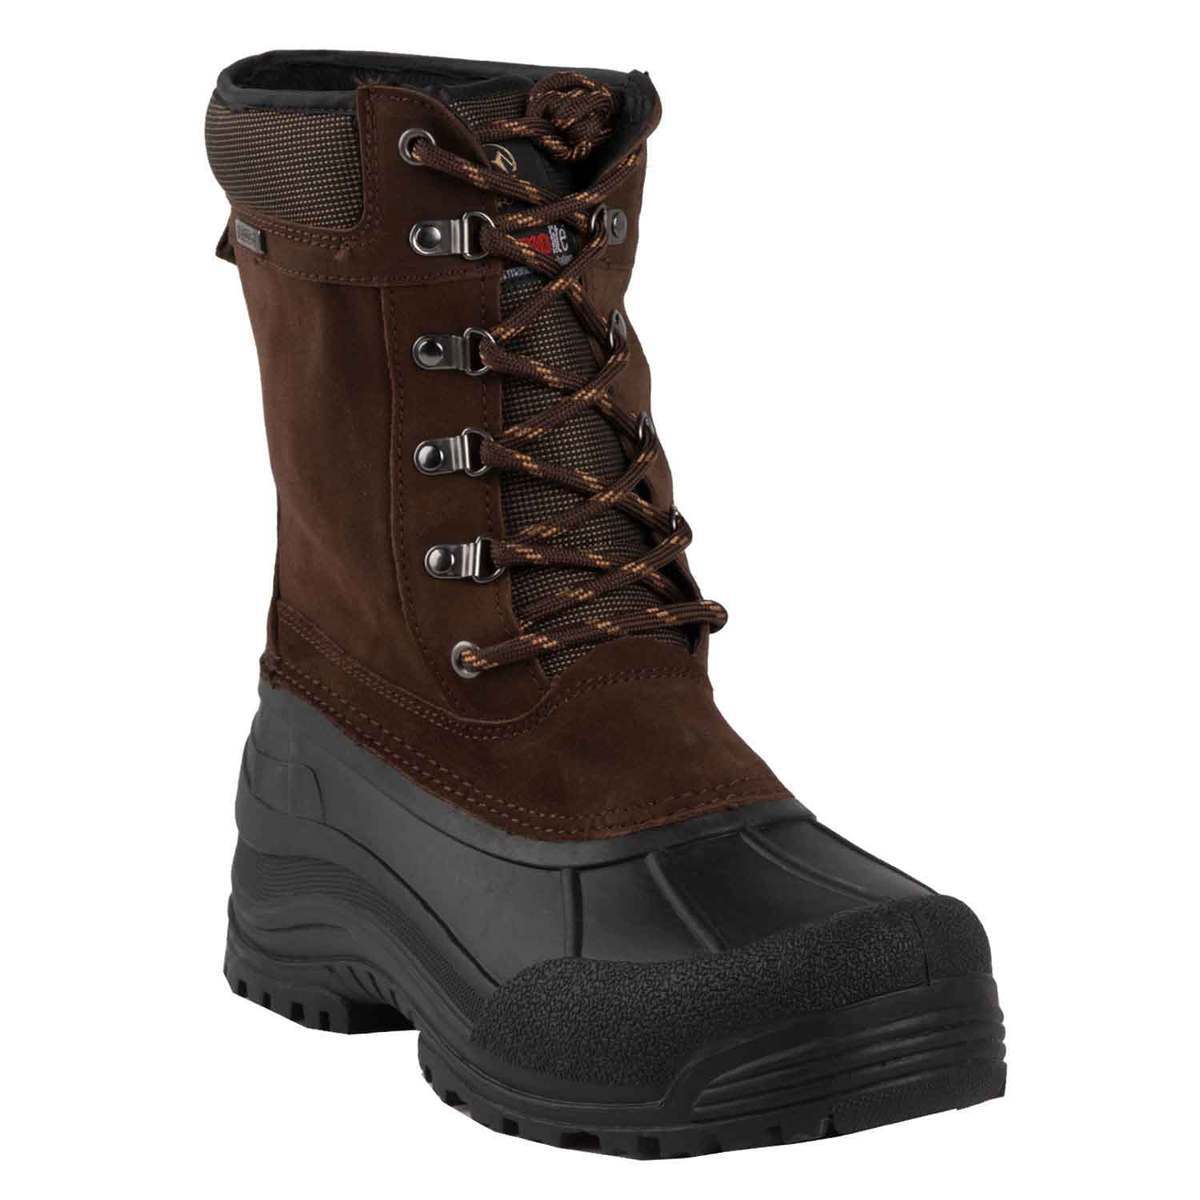 Tamarack Men's Tundra II Waterproof Winter Boots - Black 8